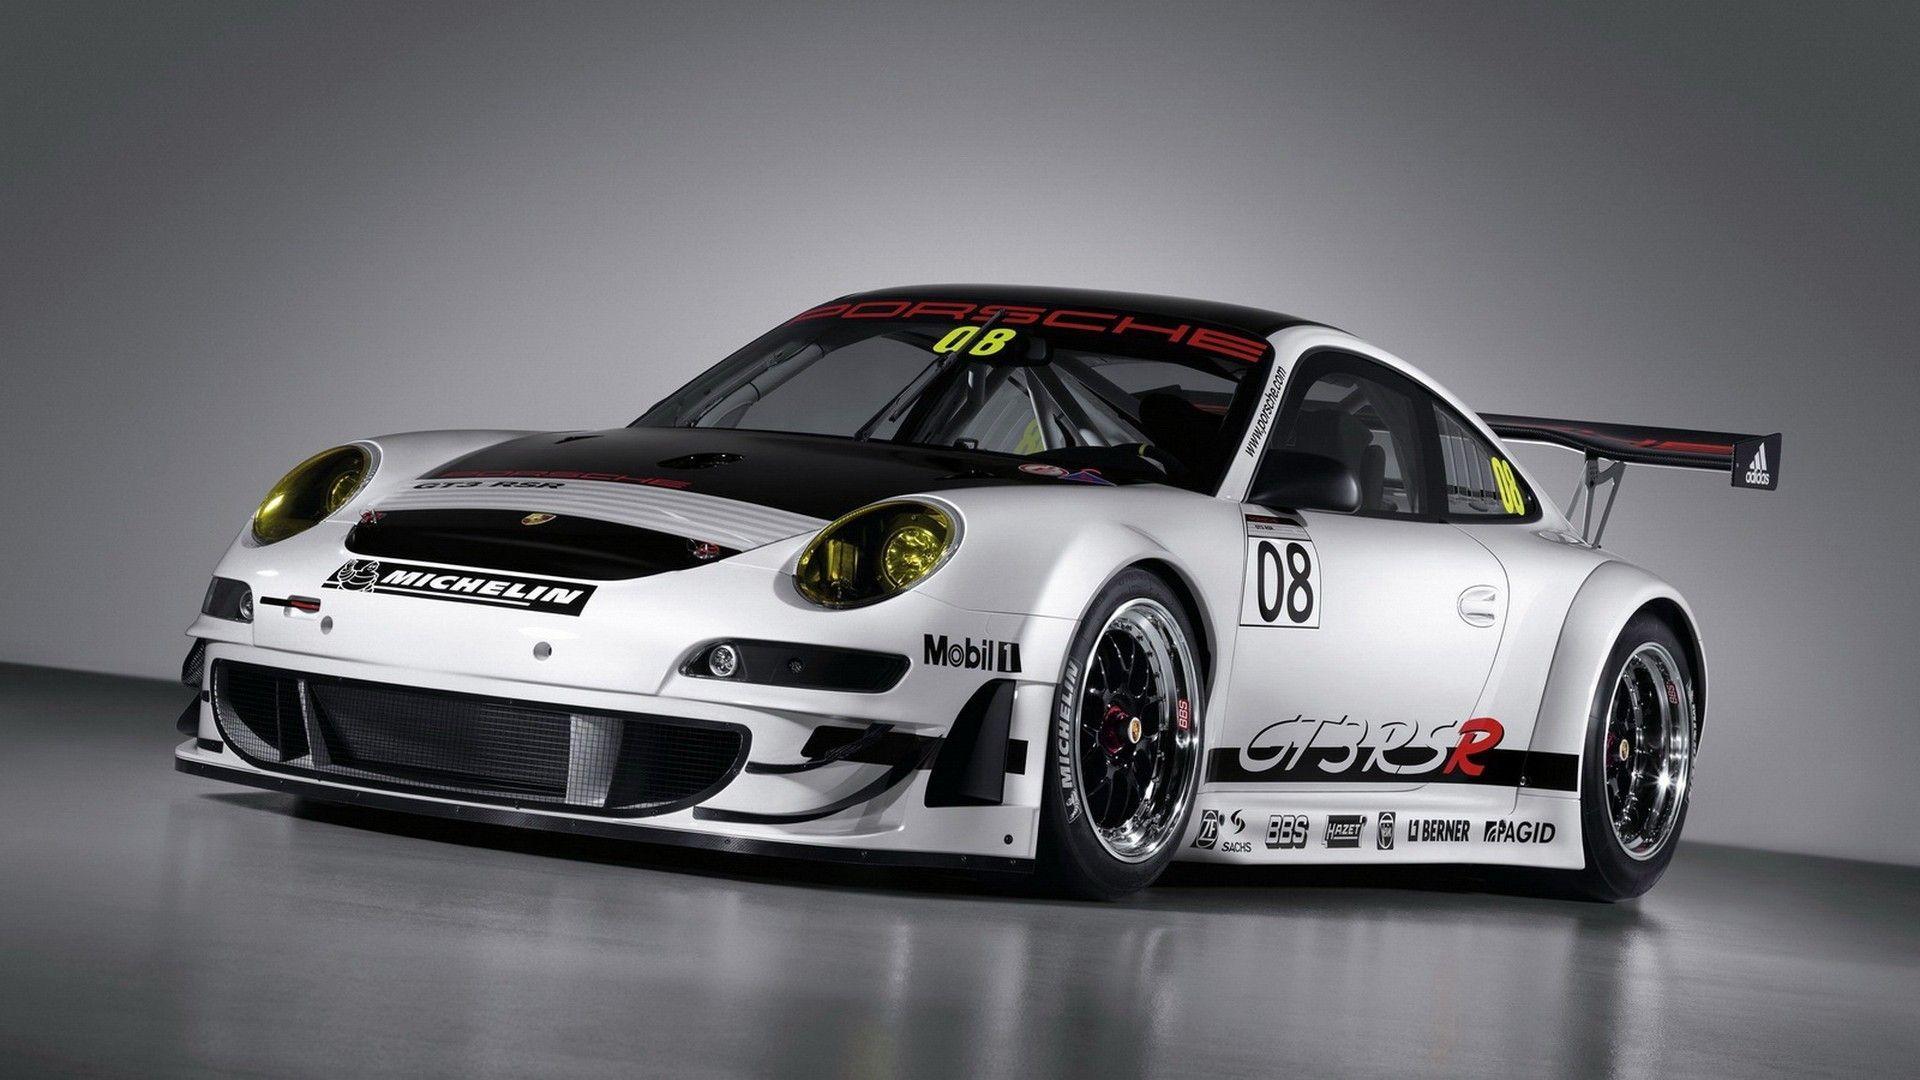 Porsche 911 GT3 RS Desktop Image Download. CarsWallpaper